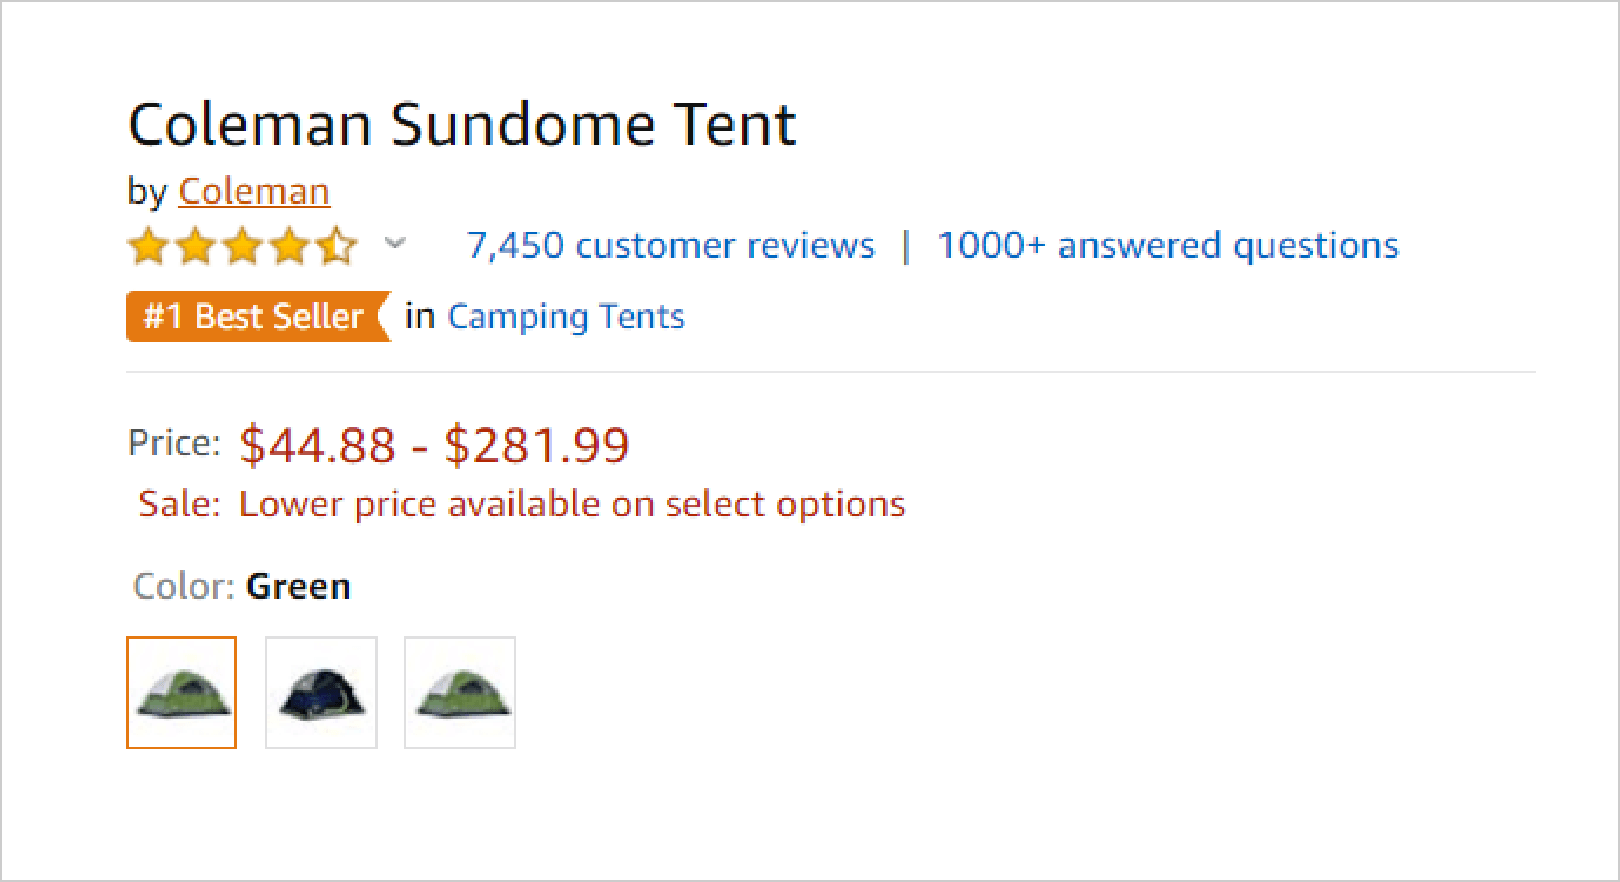 Coleman Sundome Tent using social proof bestseller